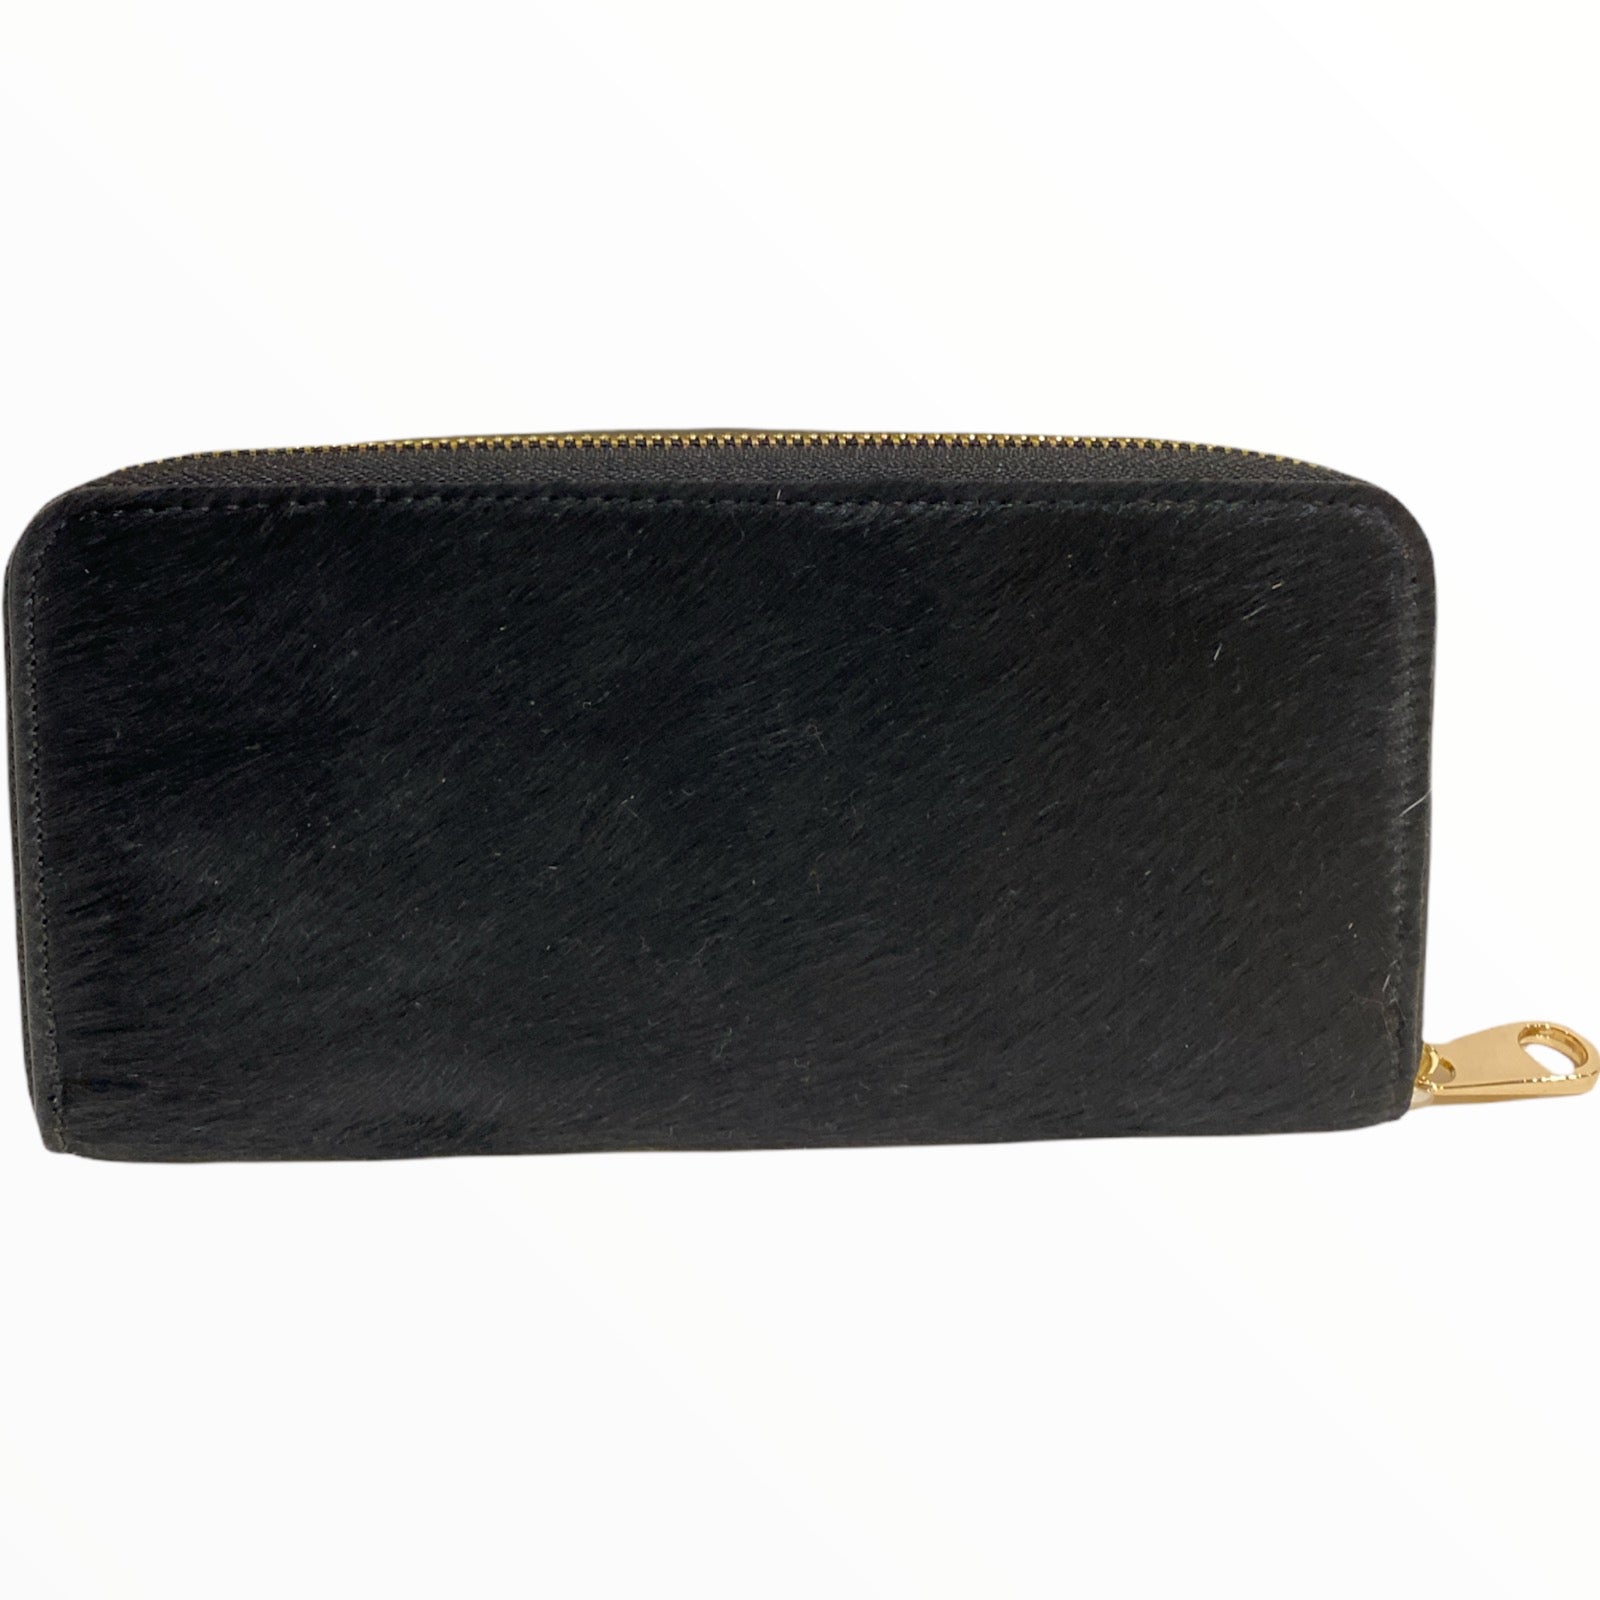 Black calf-hair zip around wallet